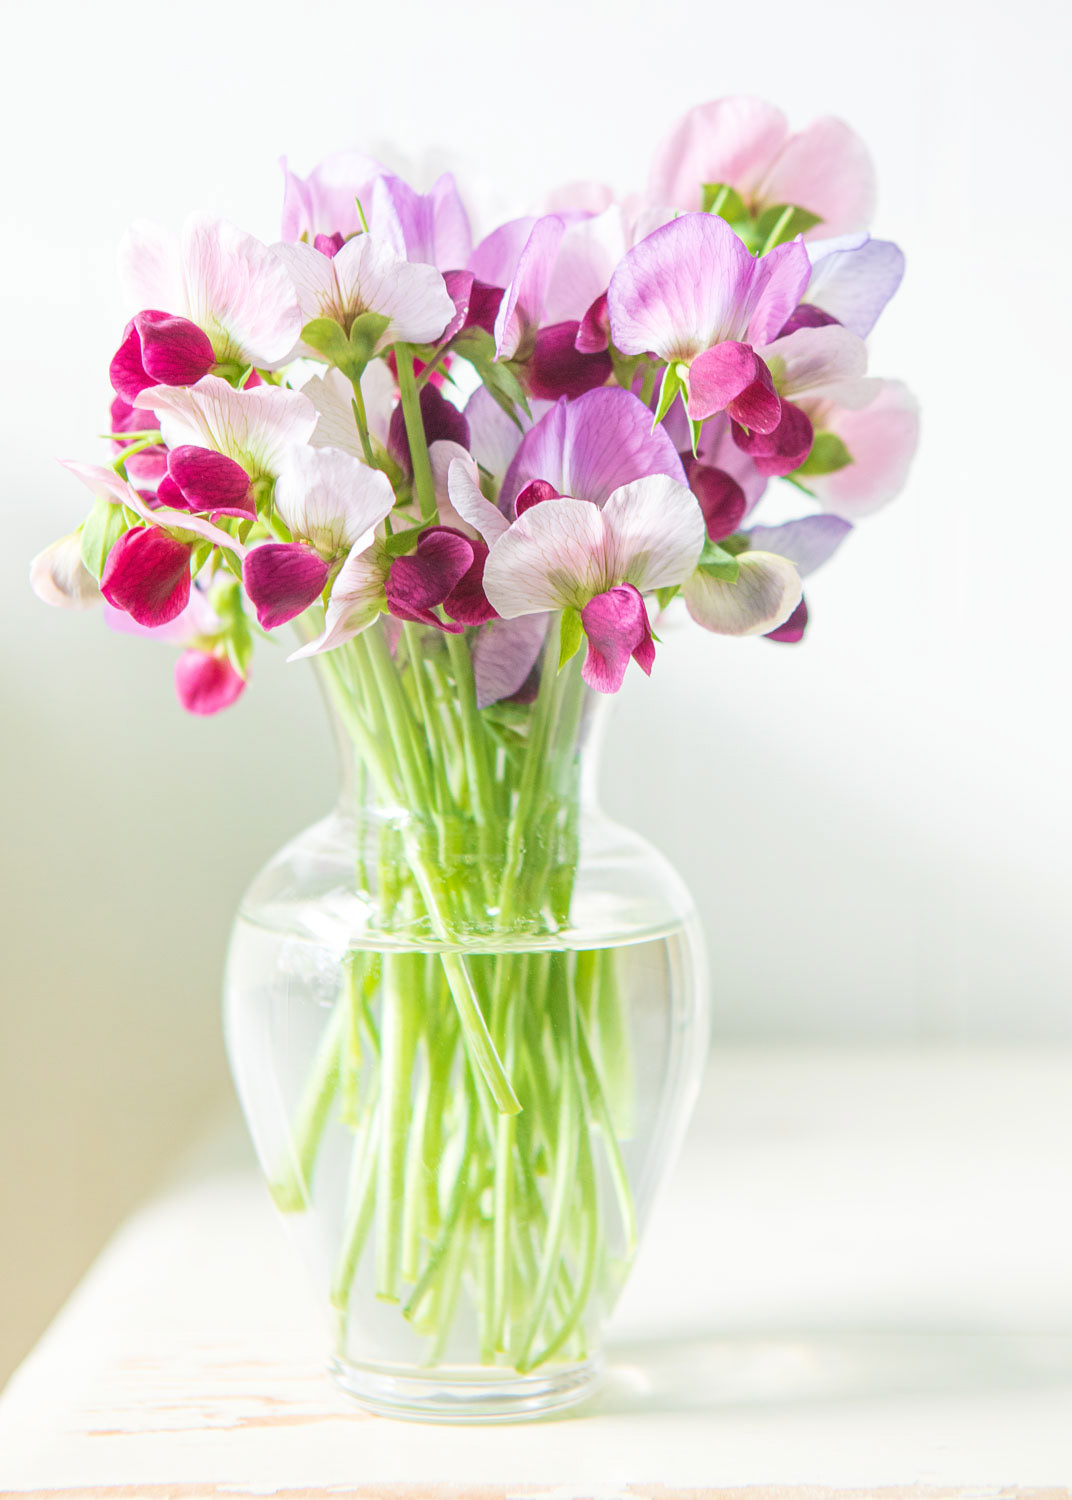 peavine blossoms in vase